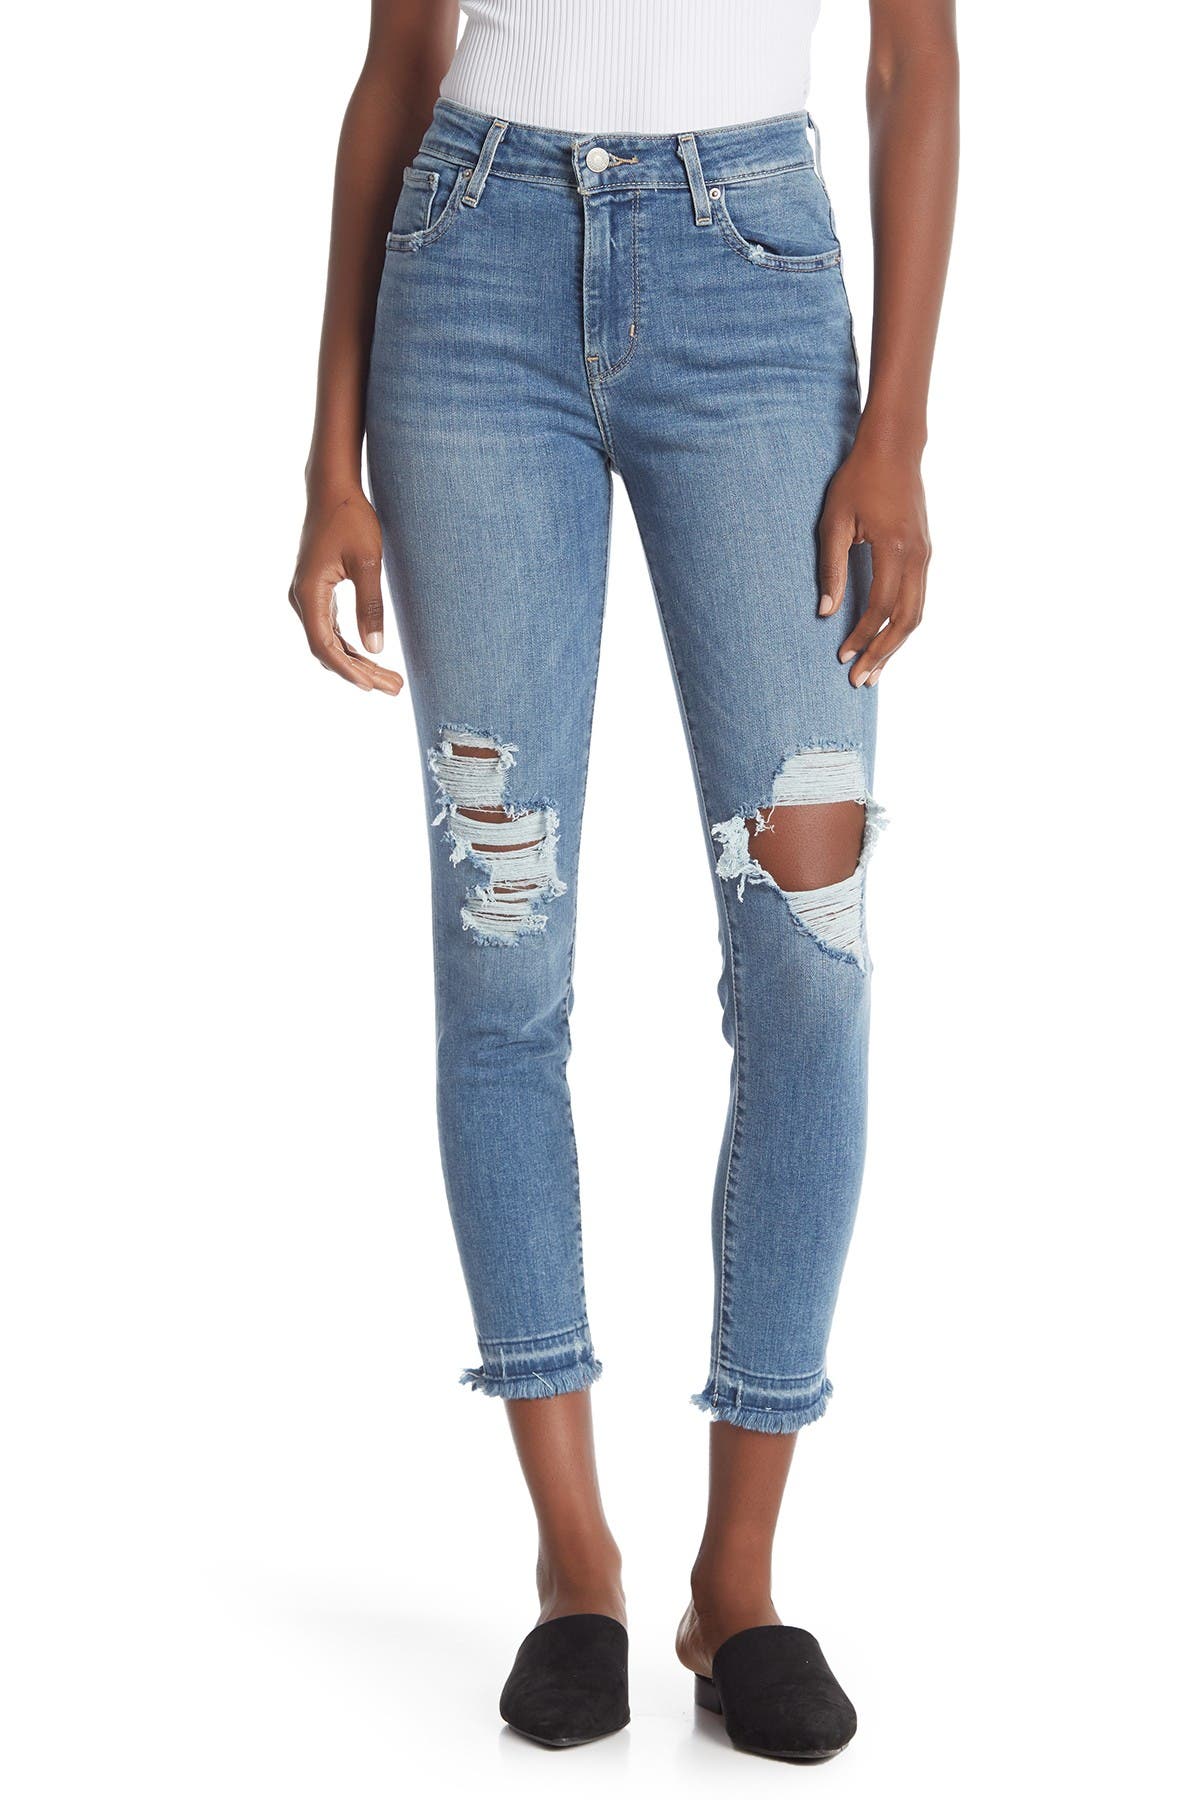 levi's high rise slim jeans